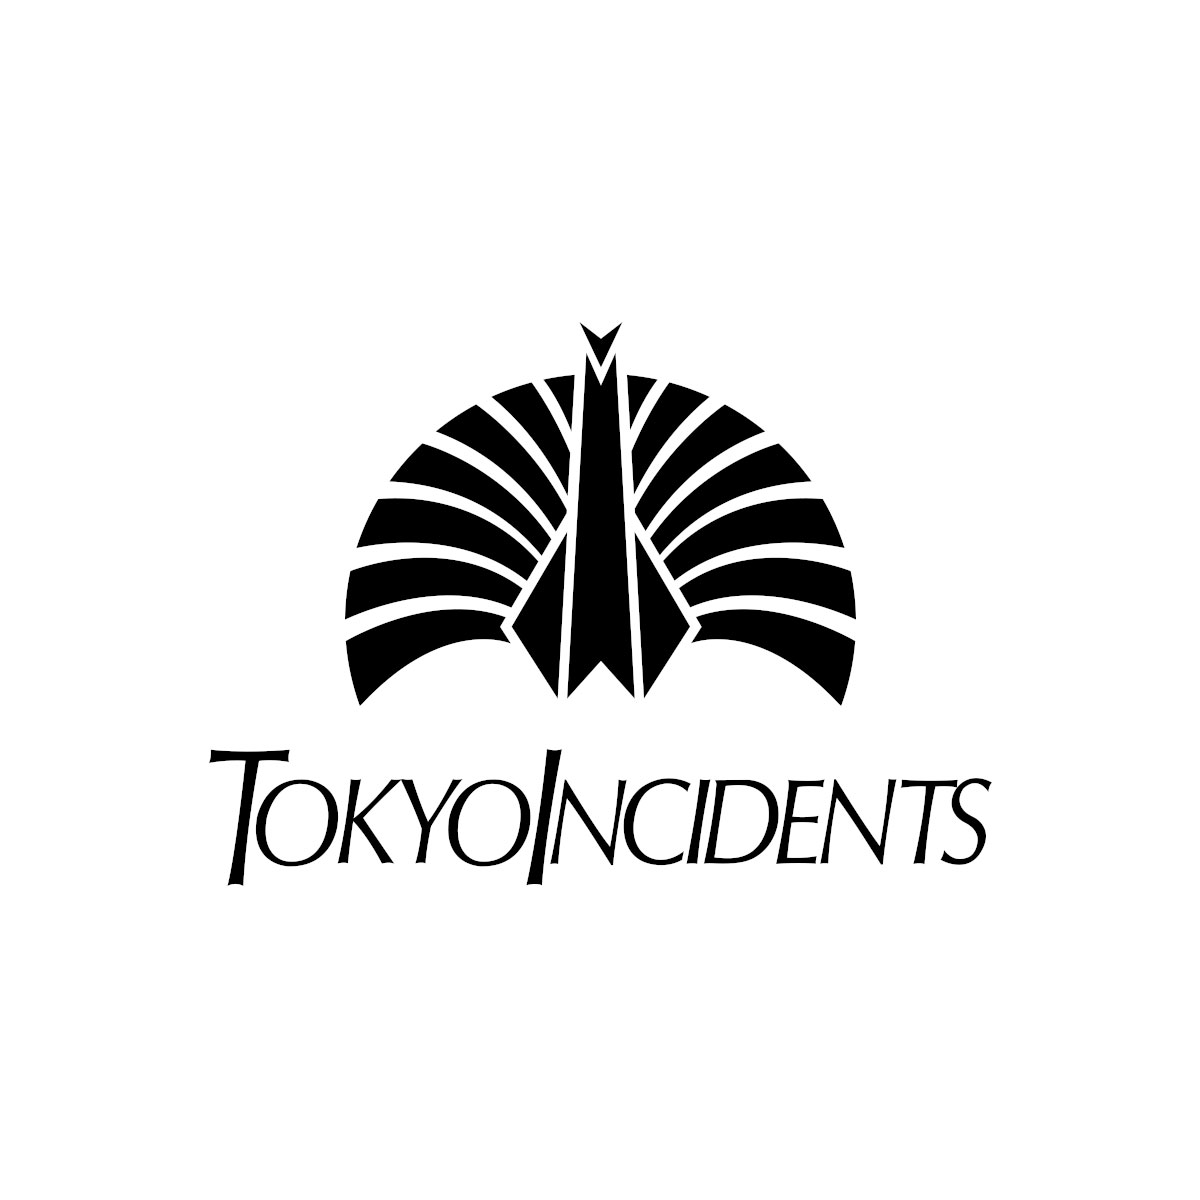 Tokyo Incidents Announced Their Return Fandom